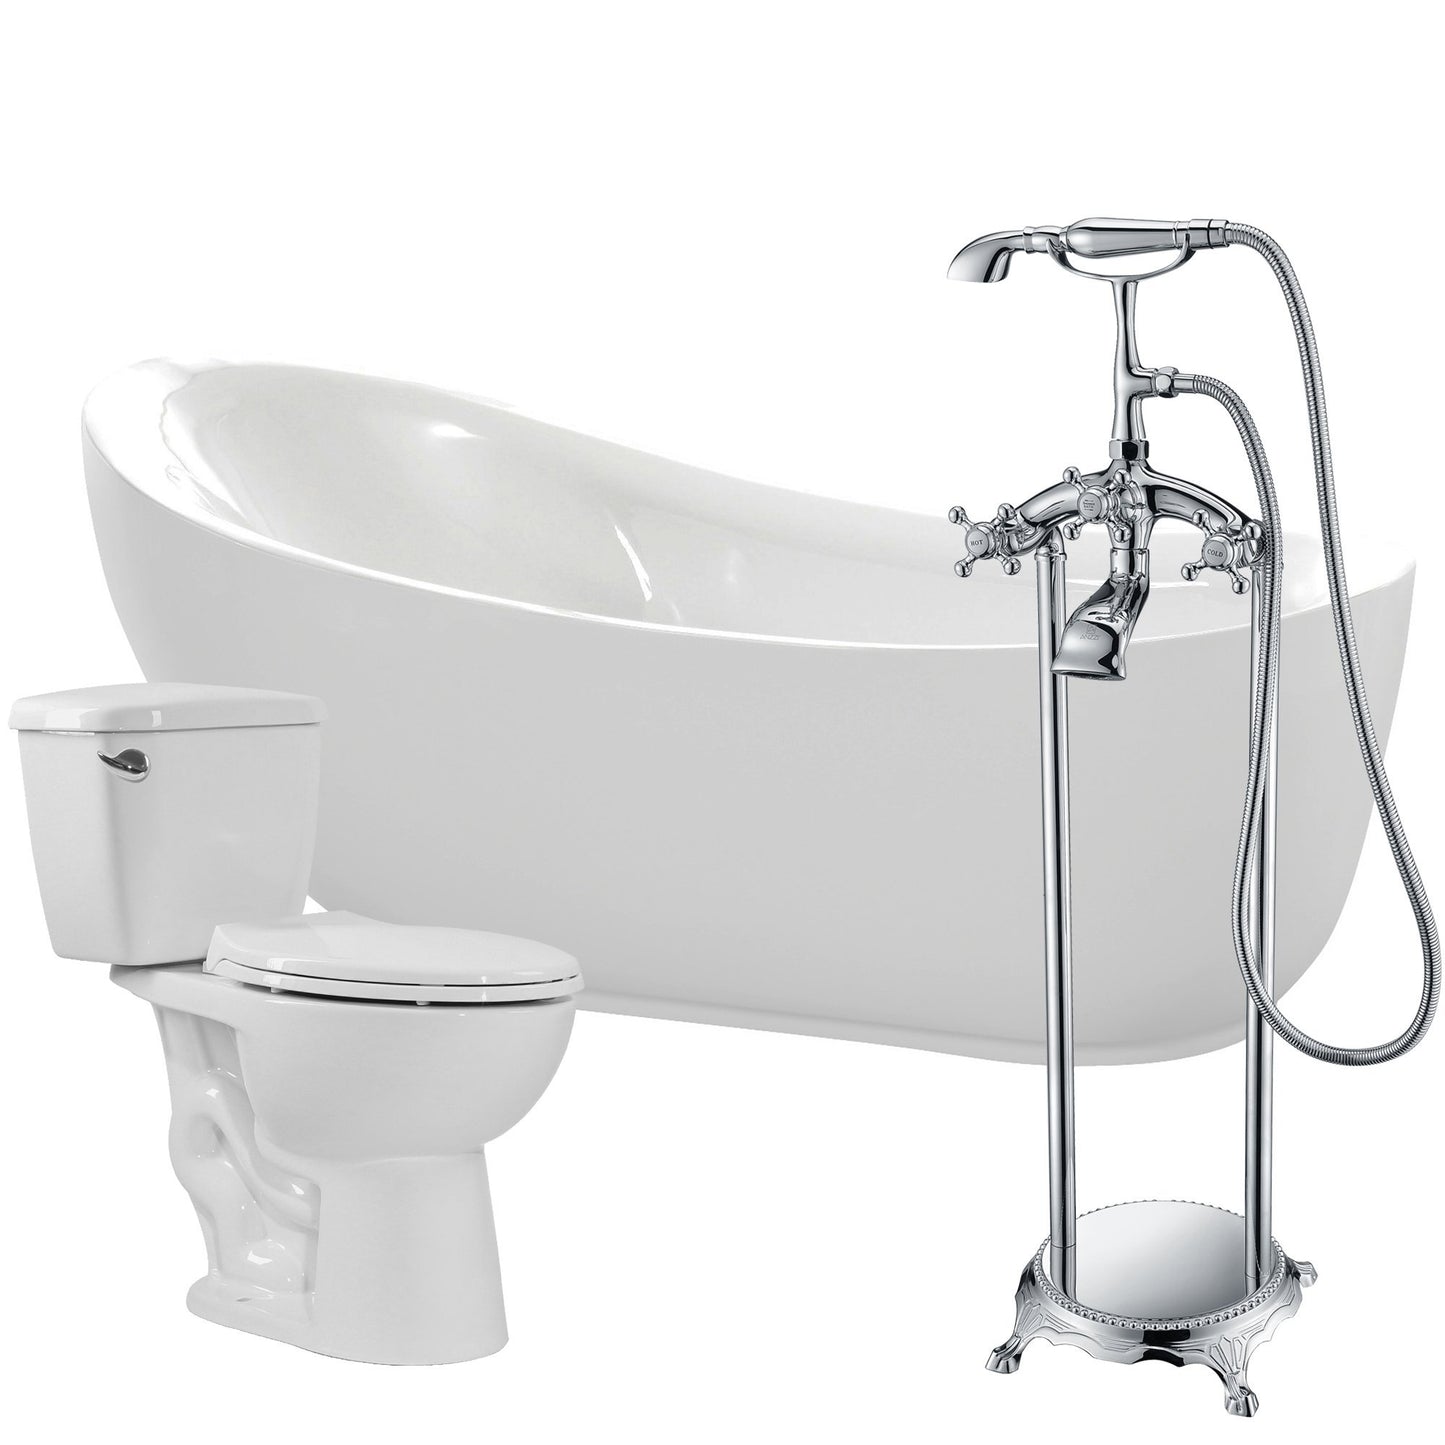 Talyah 71 in. Acrylic Soaking Bathtub with Tugela Faucet and Cavalier 1.28 GPF Toilet - Luxe Bathroom Vanities Luxury Bathroom Fixtures Bathroom Furniture